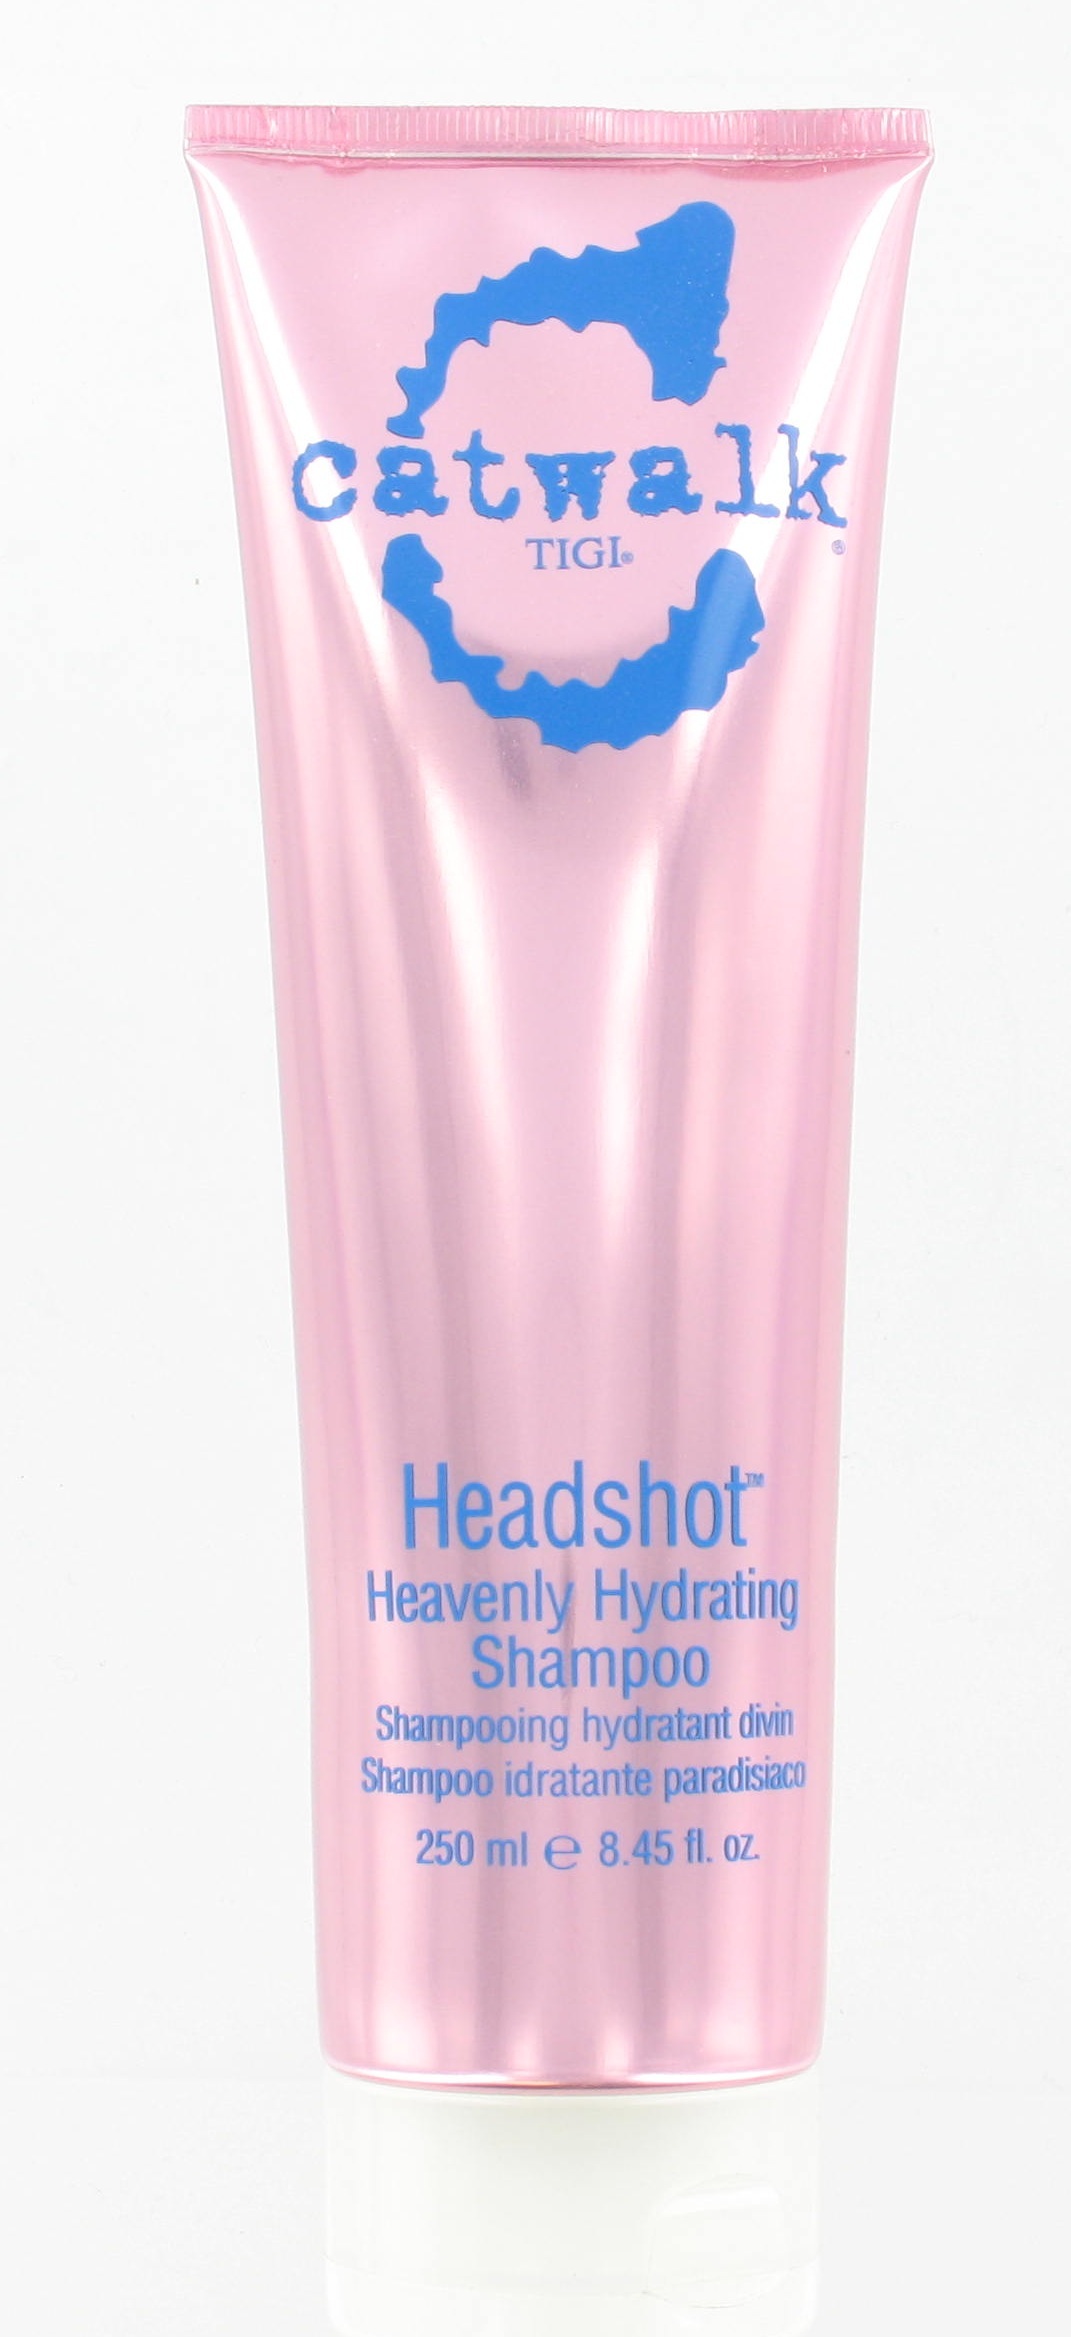 Catwalk by Tigi Headshot Heavenly Hydrating